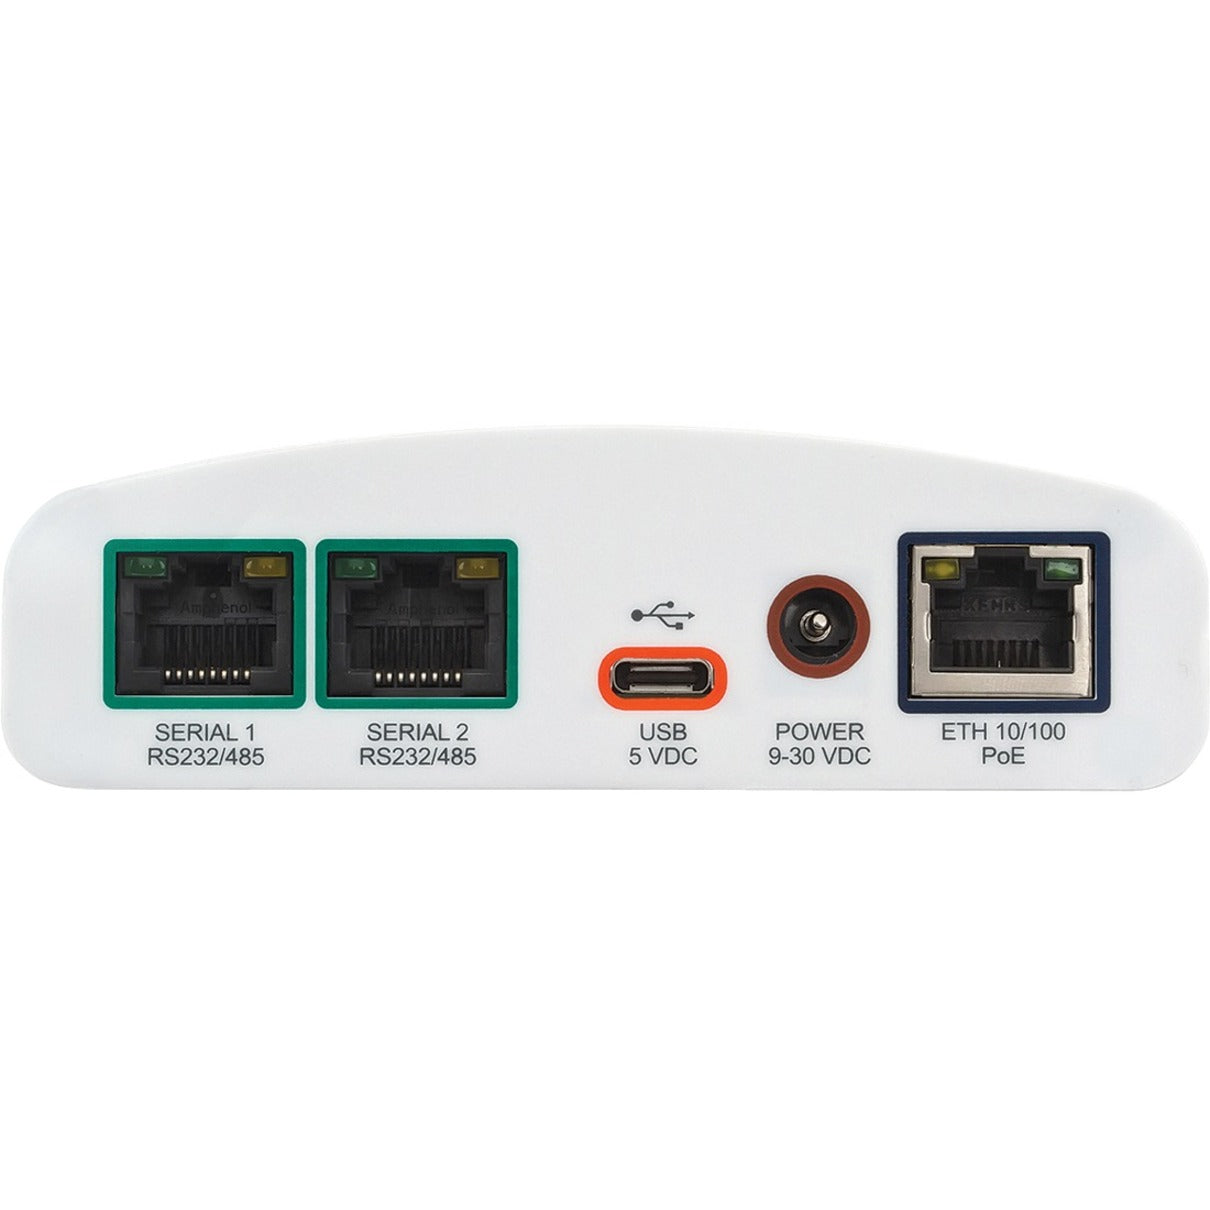 Lantronix SGX5150202US SGX 5150 IoT Device Gateway, 11AC 2XRS485 USB & Ethernet